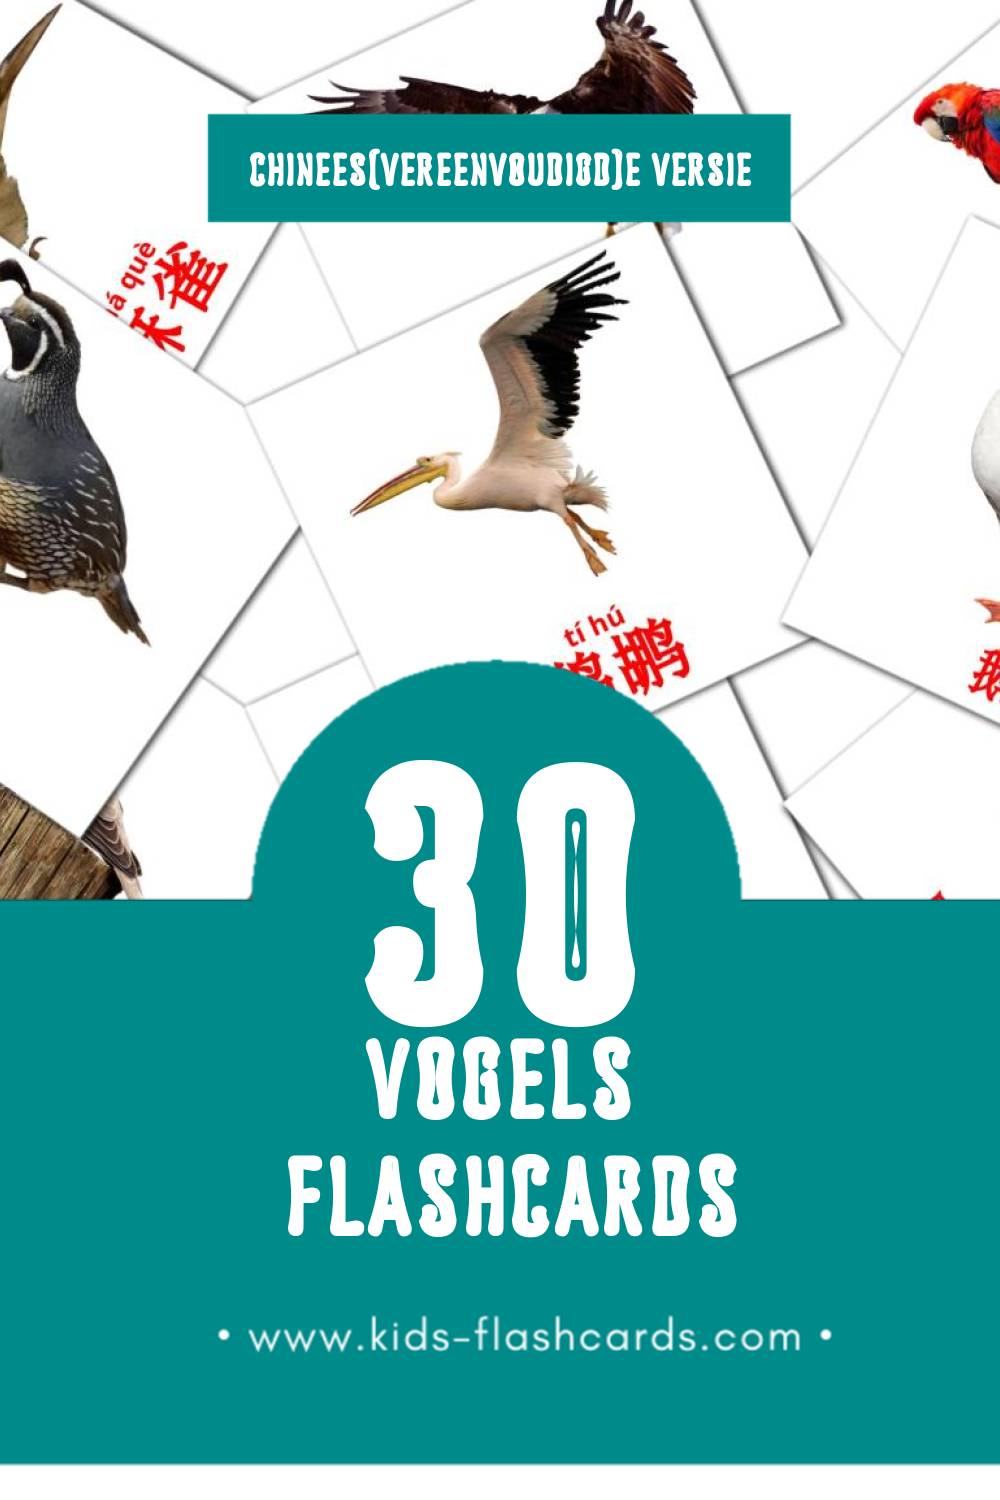 Visuele 鸟类 Flashcards voor Kleuters (30 kaarten in het Chinees(vereenvoudigd))